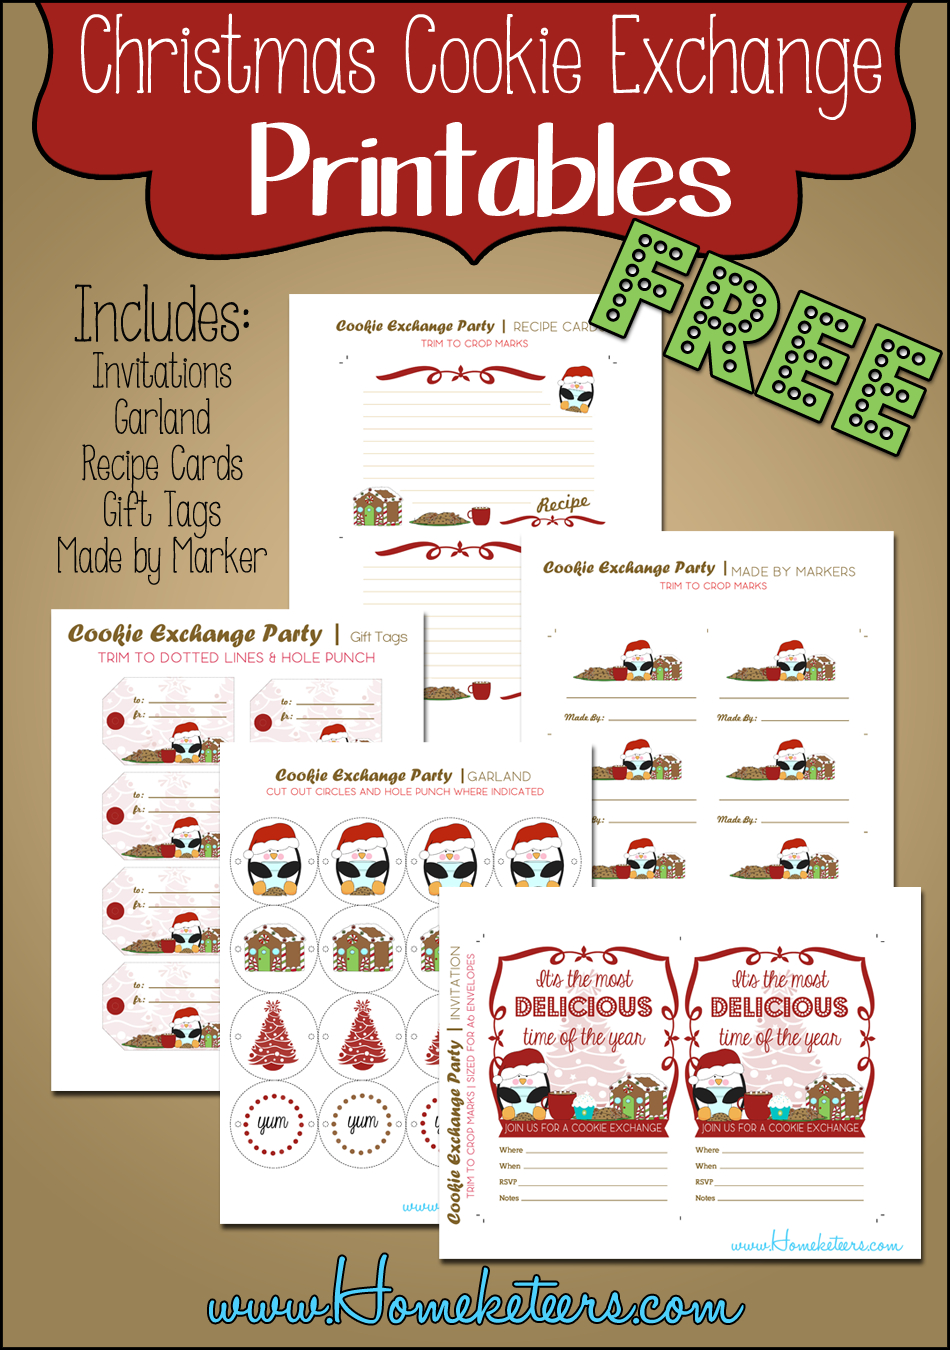 Christmas Cookie Exchange ~ Free Printables | Hoa Committee Ideas - Free Christmas Cookie Exchange Printable Invitation